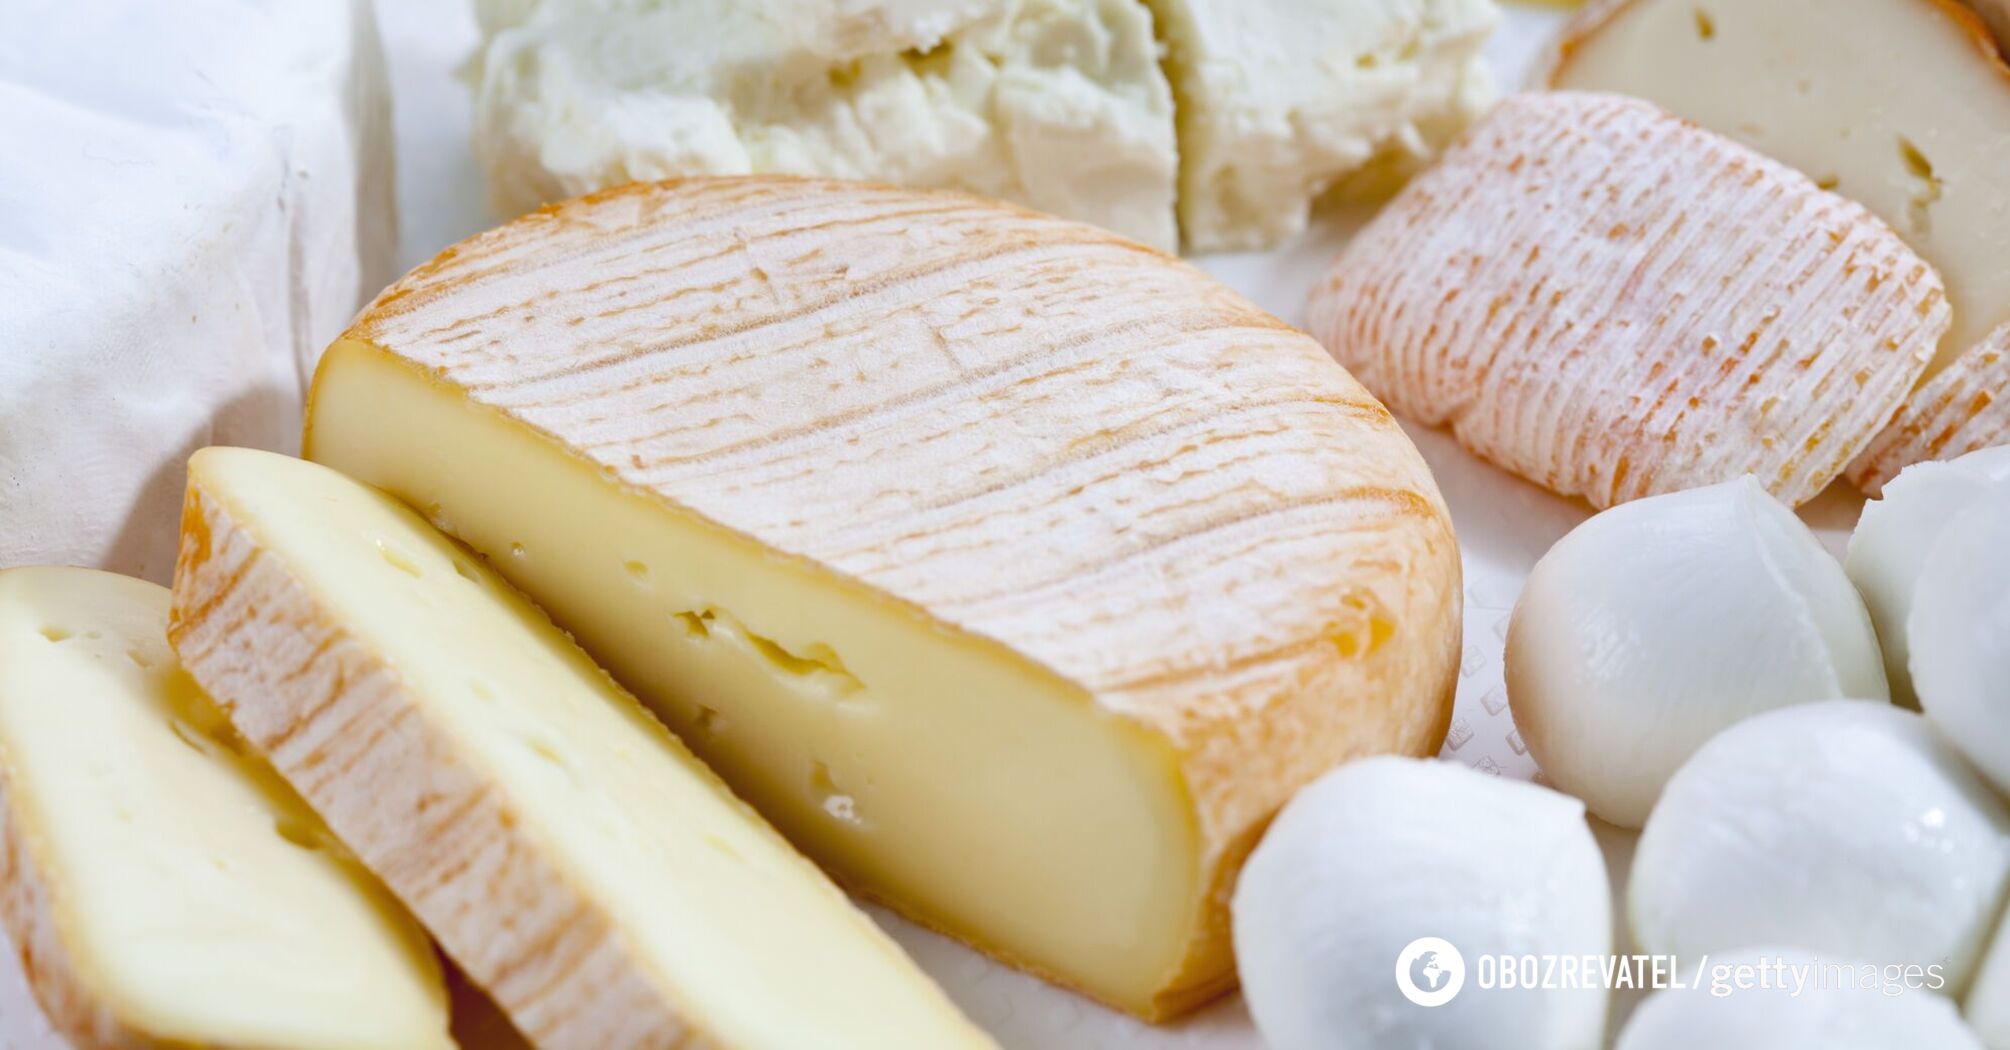 How to keep cheese fresh